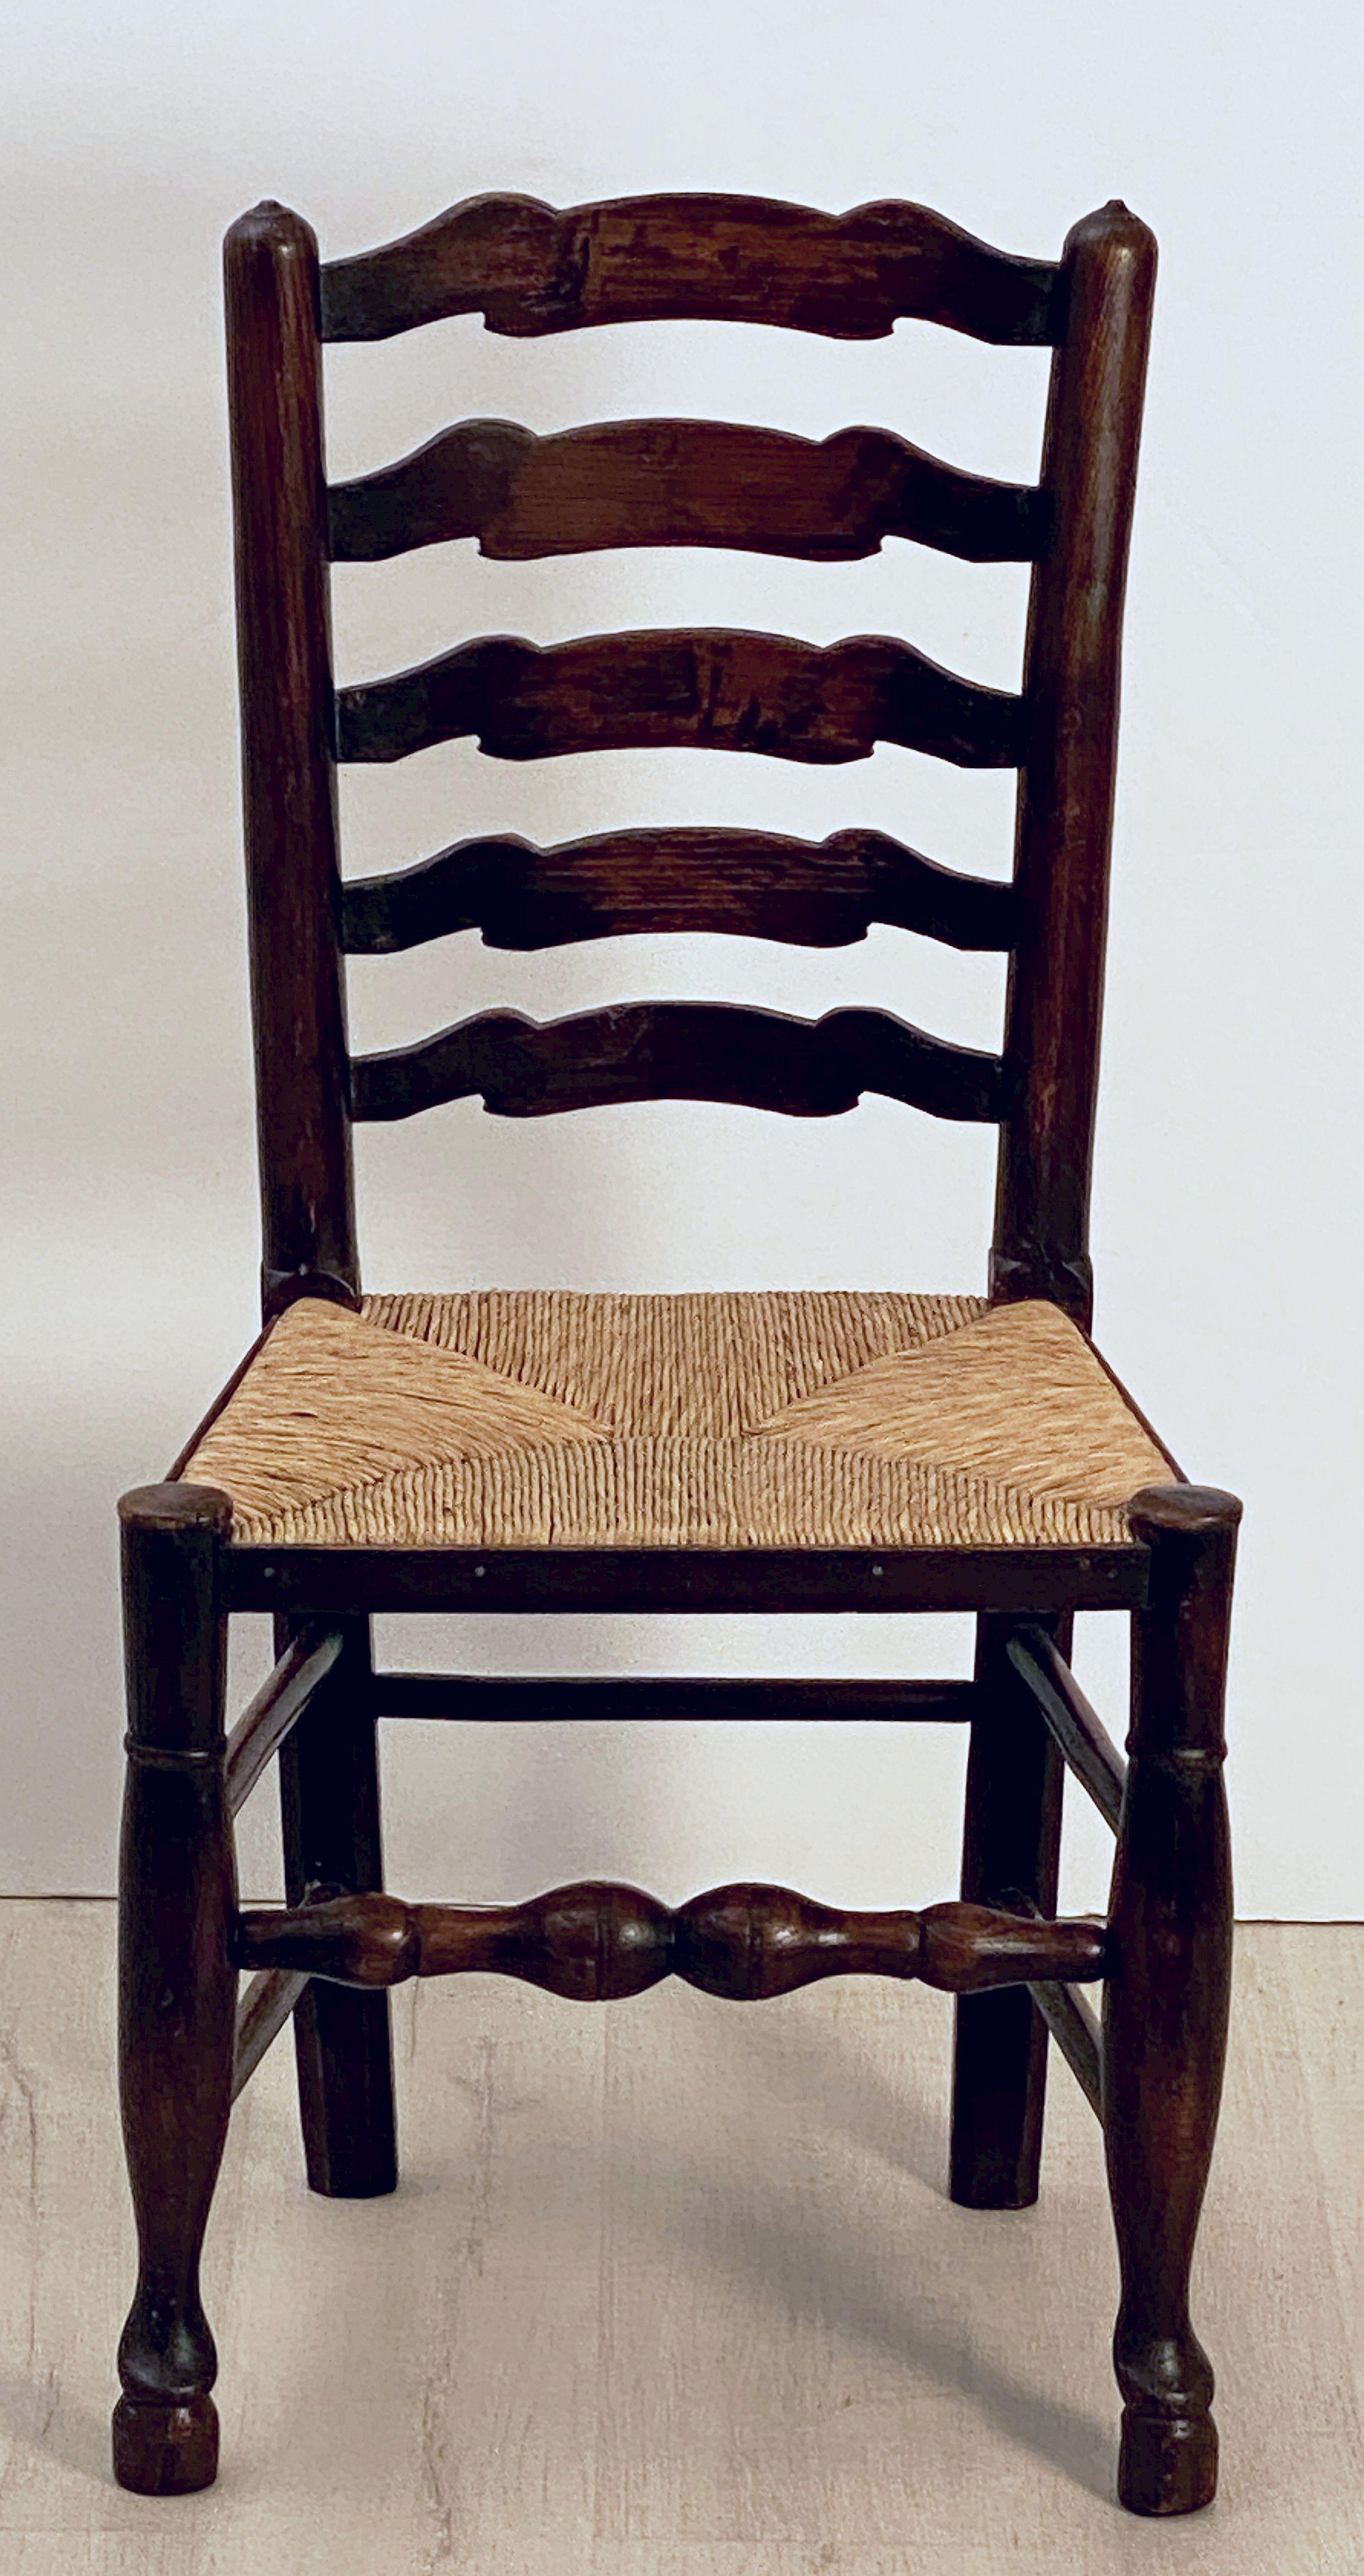 Turned Set of Six English Ladderback Rush-Seat Farm Chairs